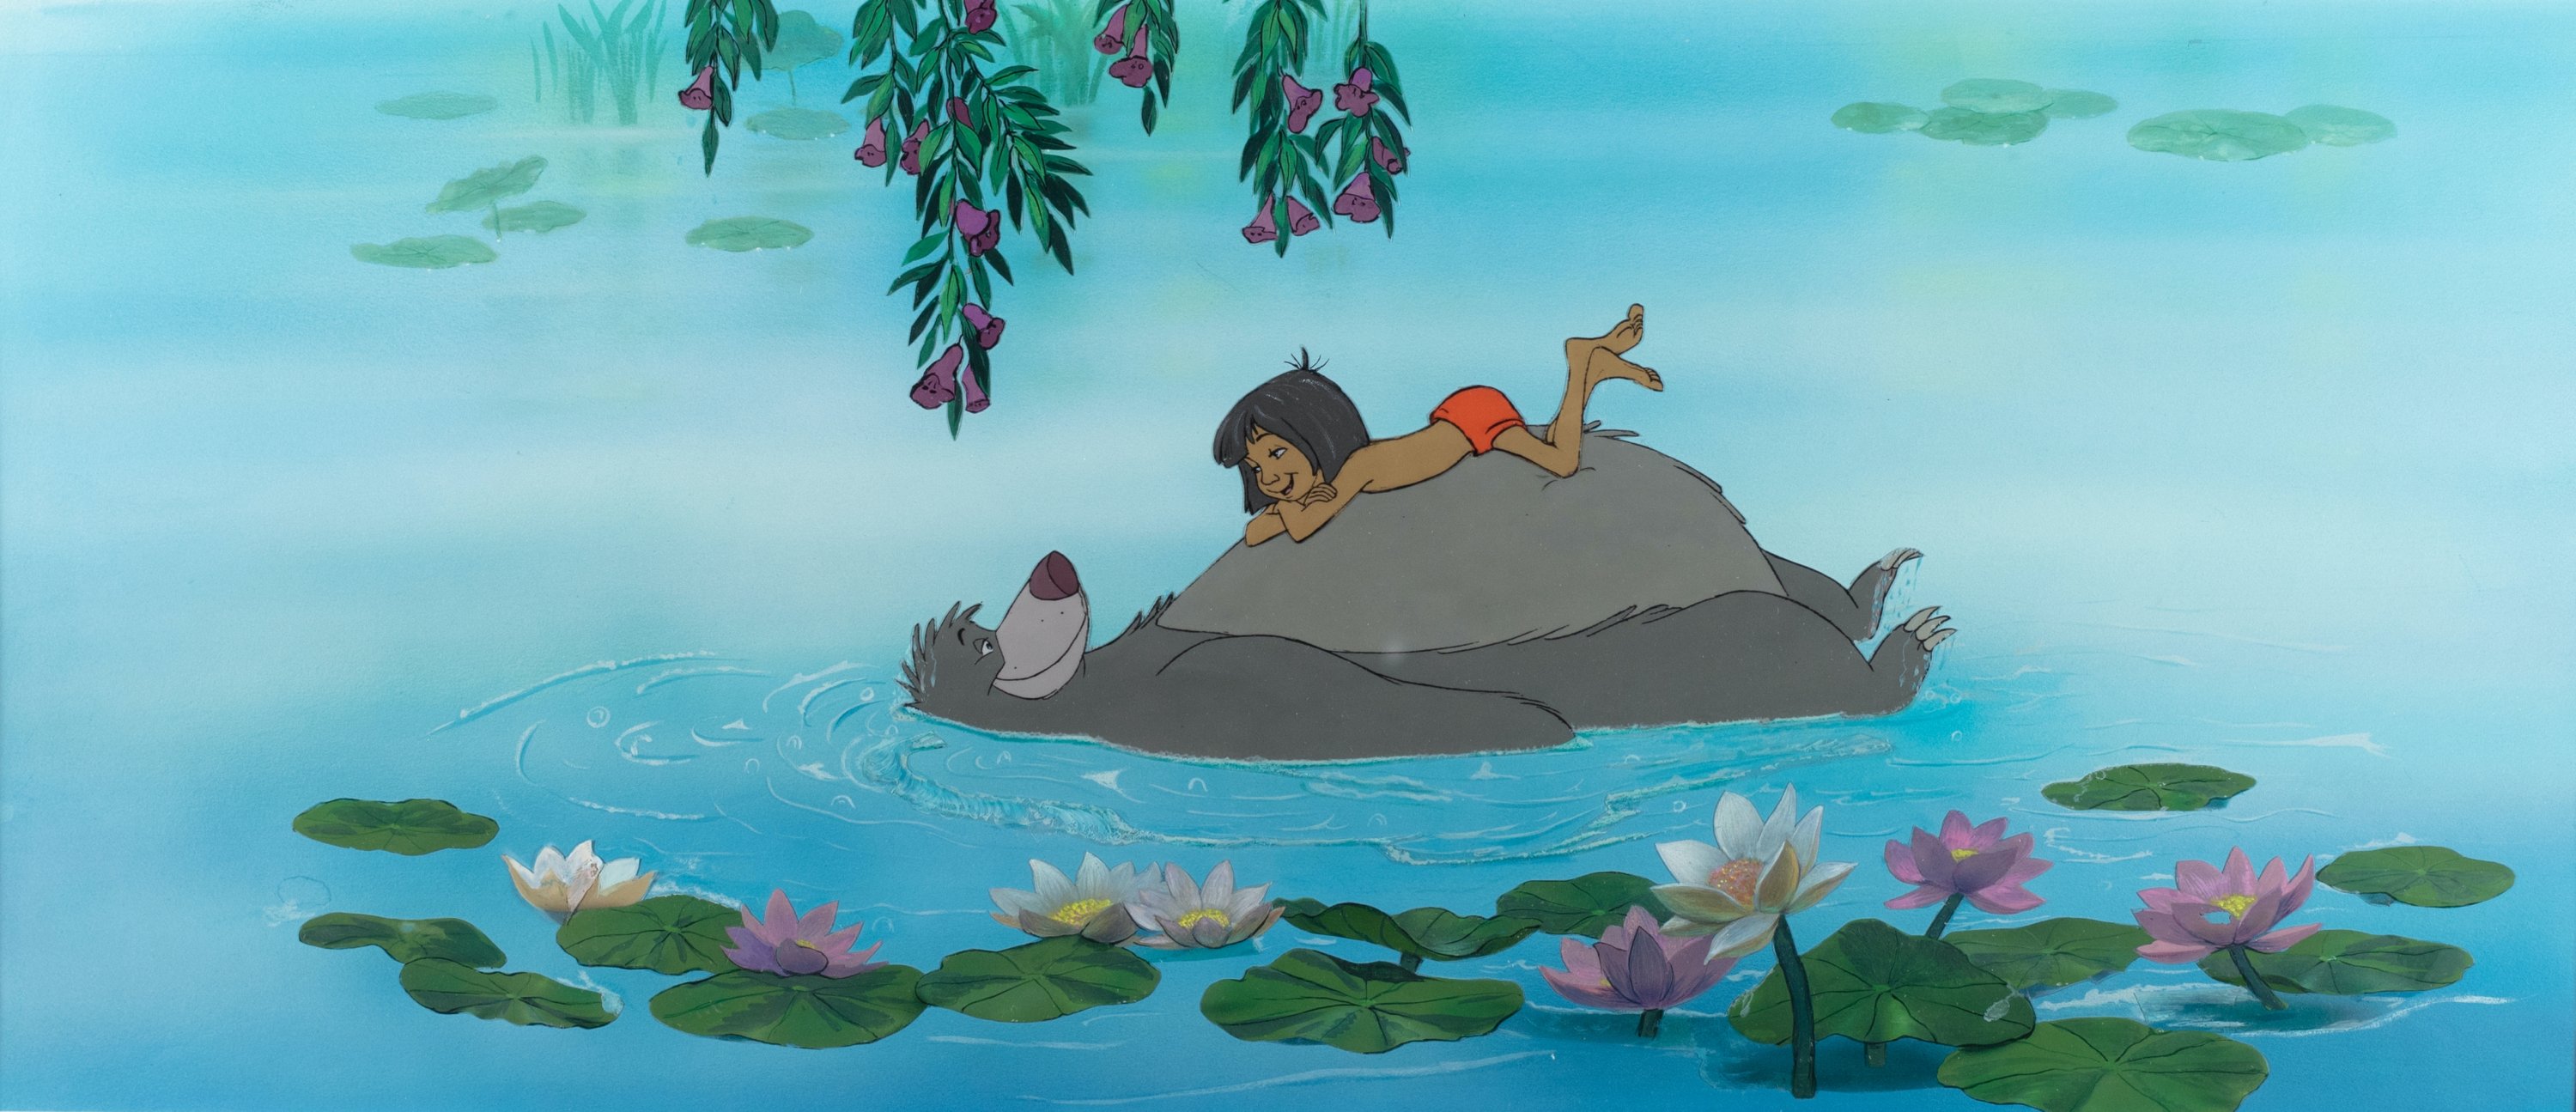 Disney museum show celebrates 55th year of original 'Jungle Book' | Daily  Sabah